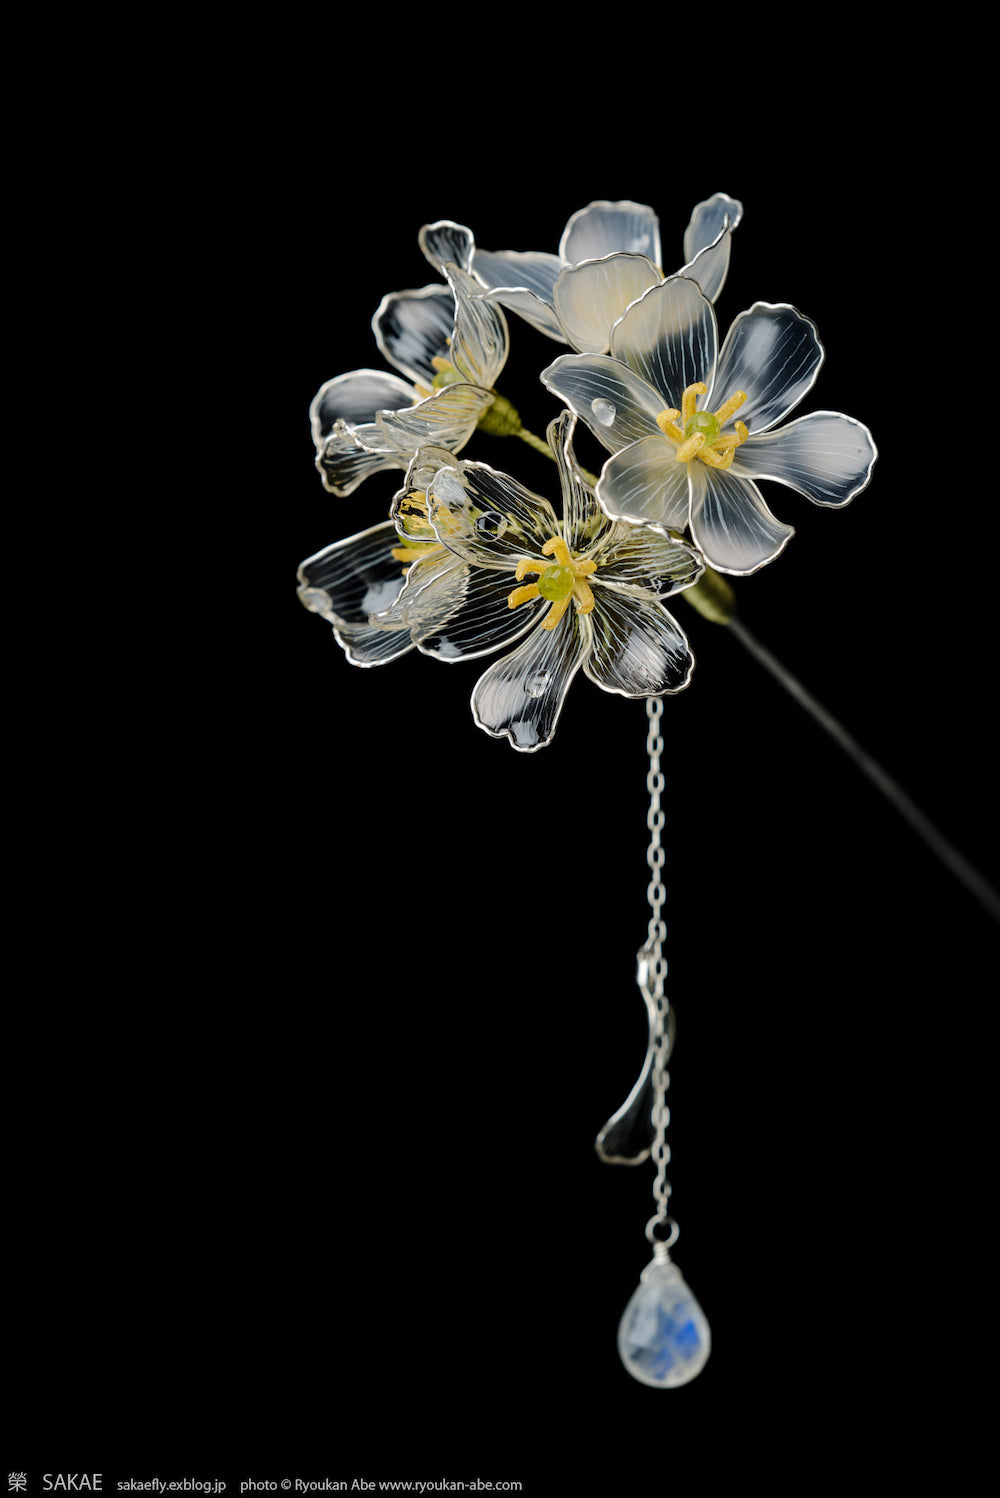 Japanese Artist Sakae Turns Blossoms Into Wearable Pieces of Art Hairpin Art